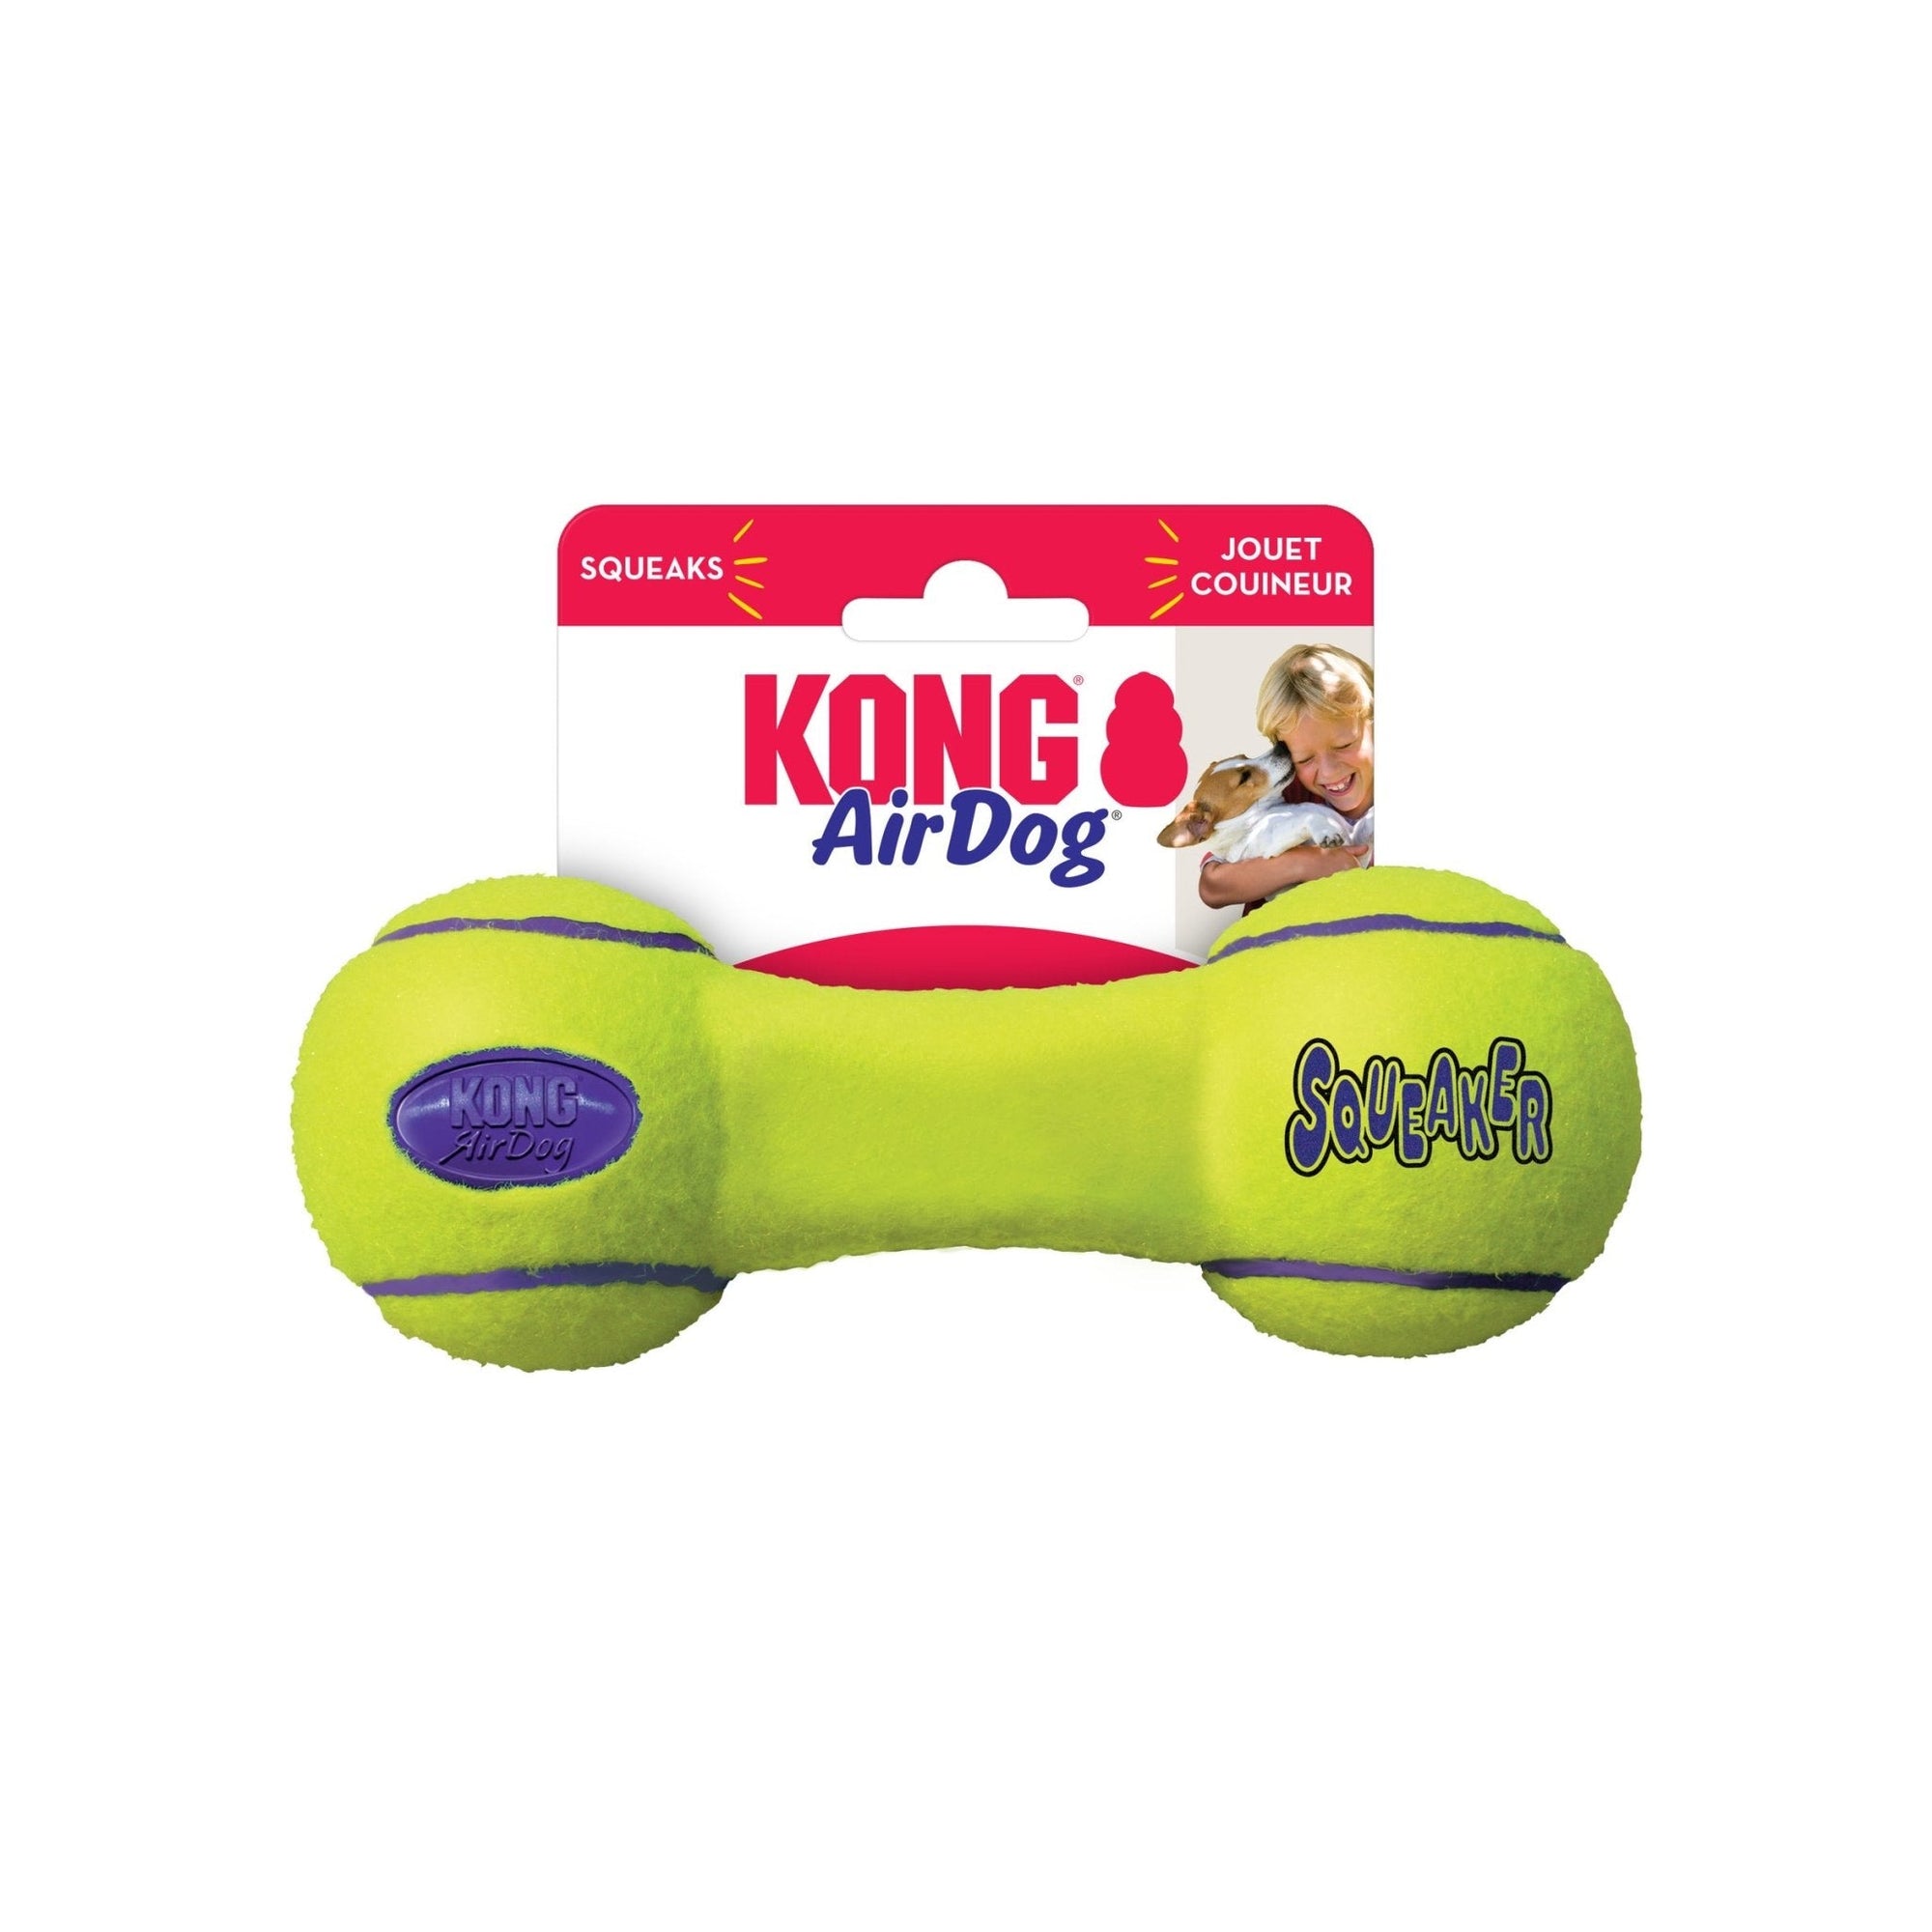 KONG AirDog Squeaker Dumbbell Dog Toy, Kong, Medium